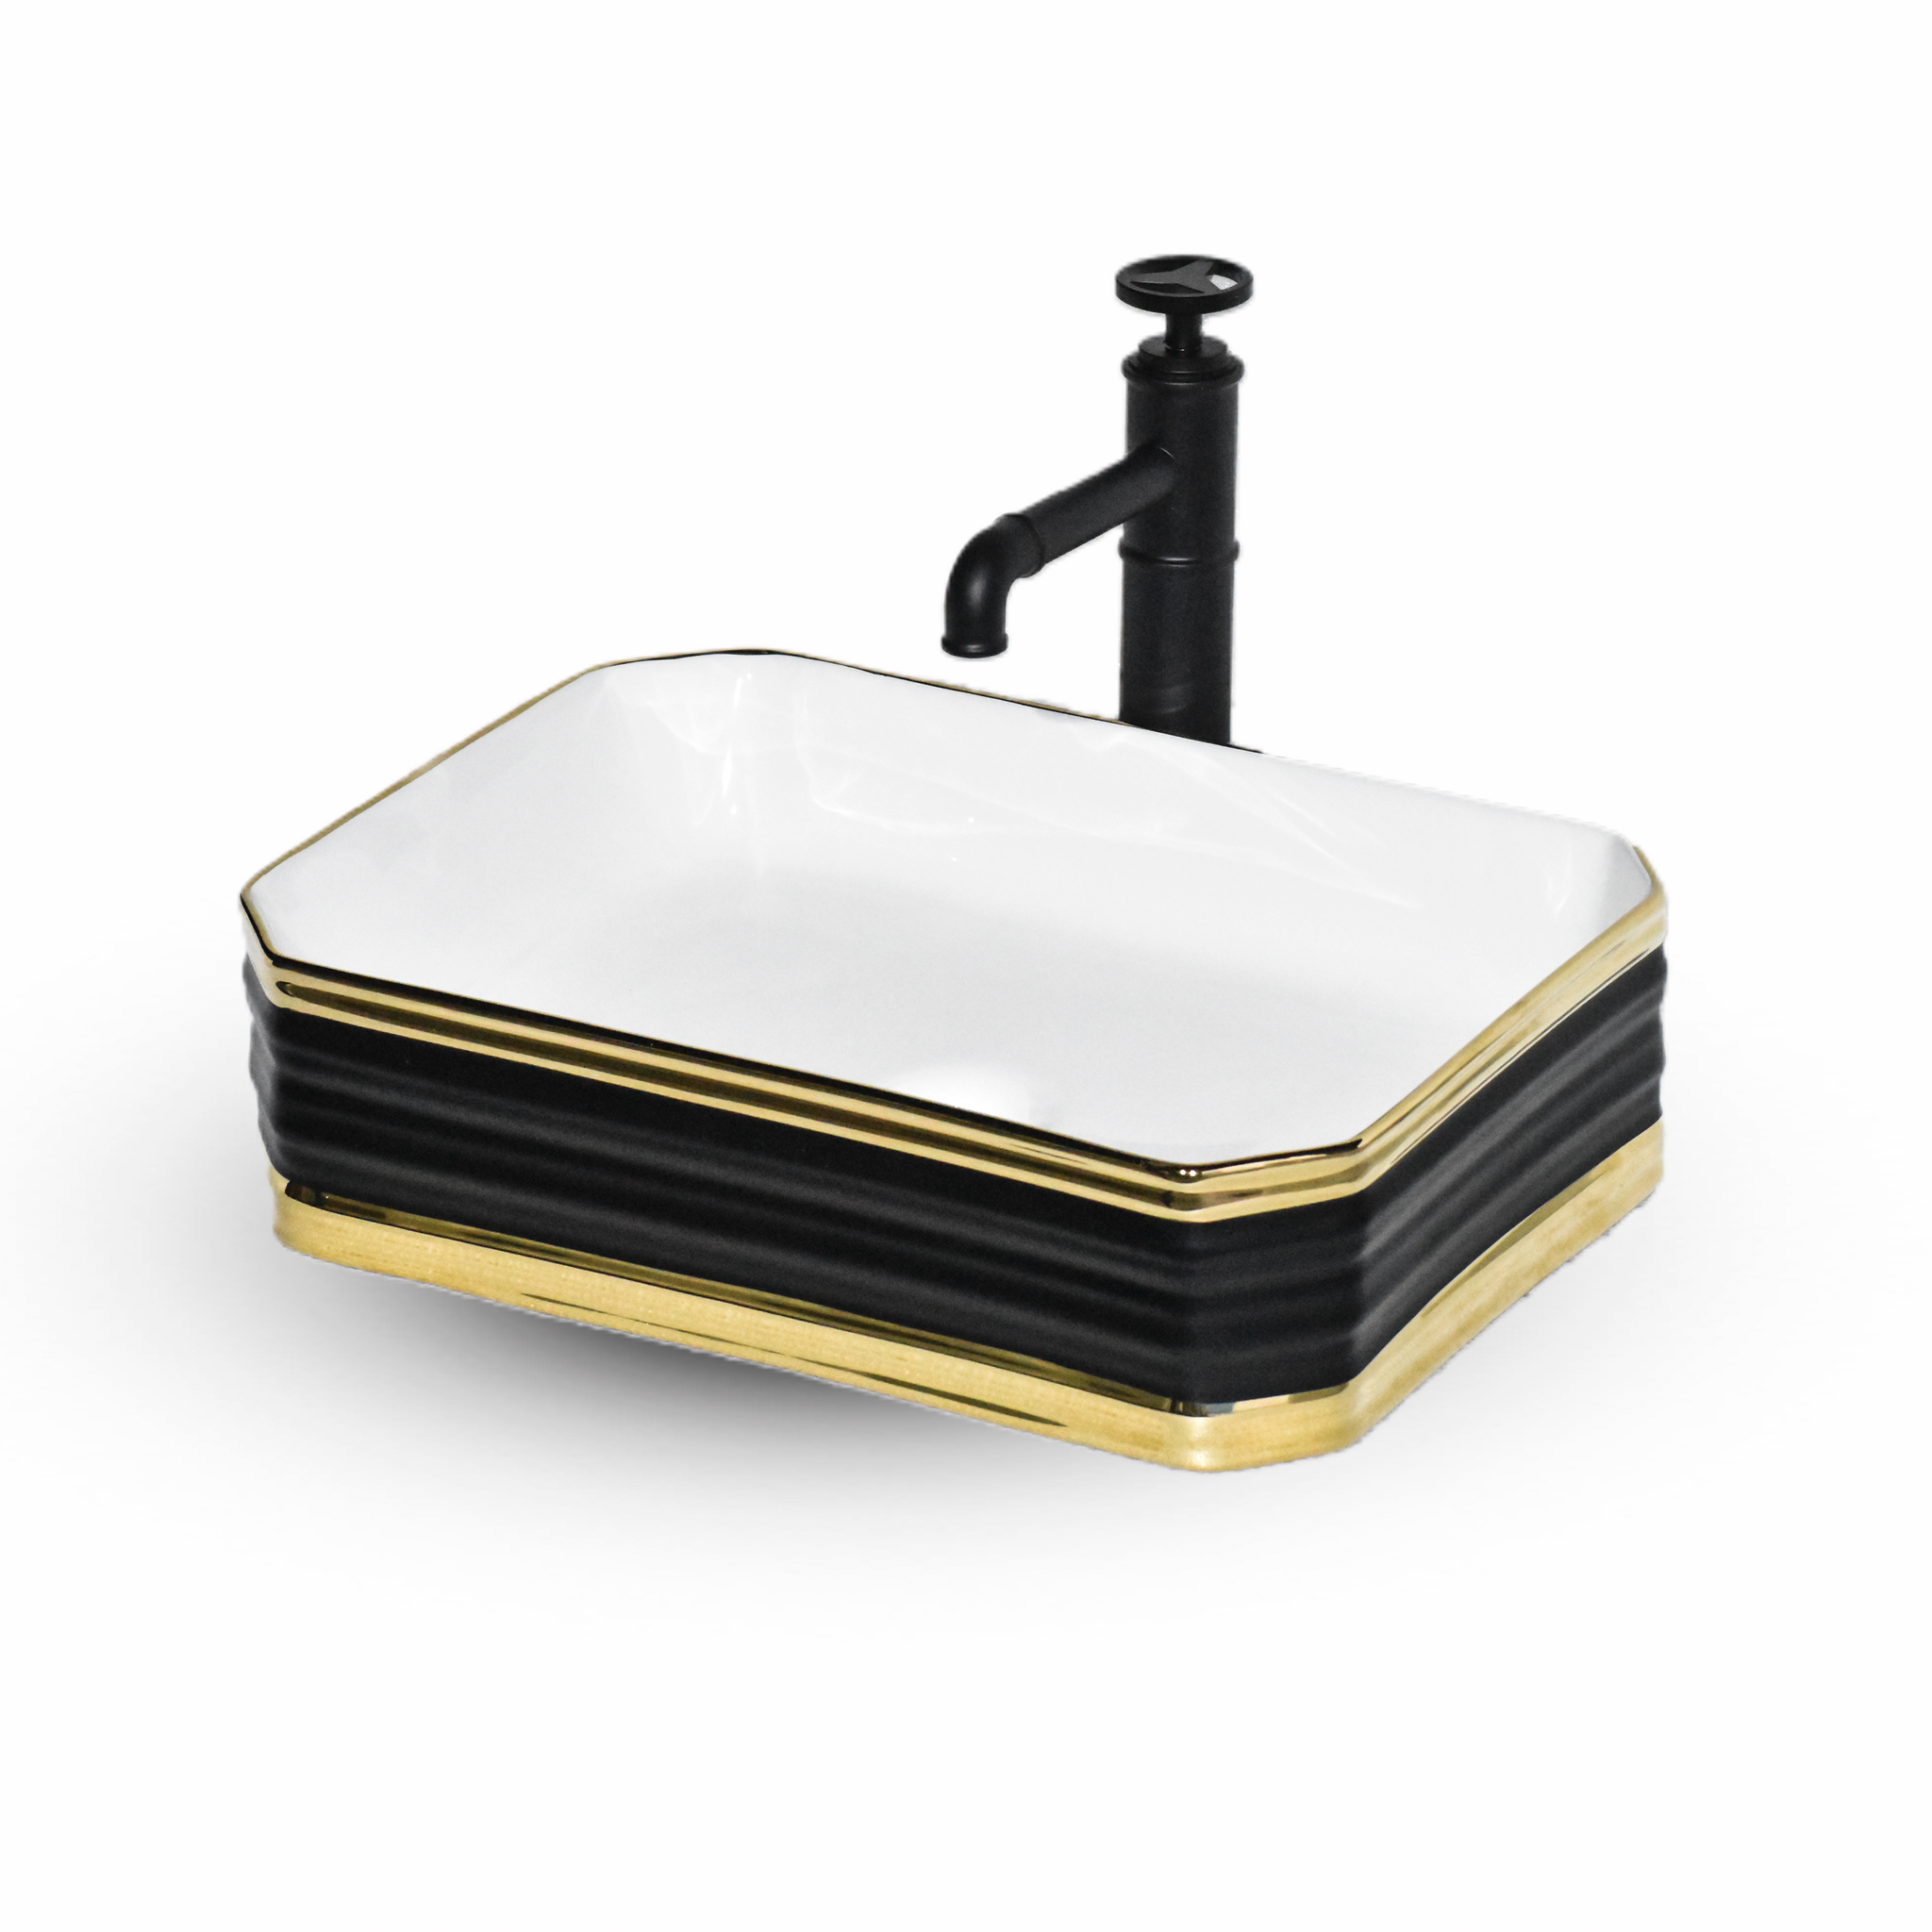 inart wash basin designs in hall black gold color